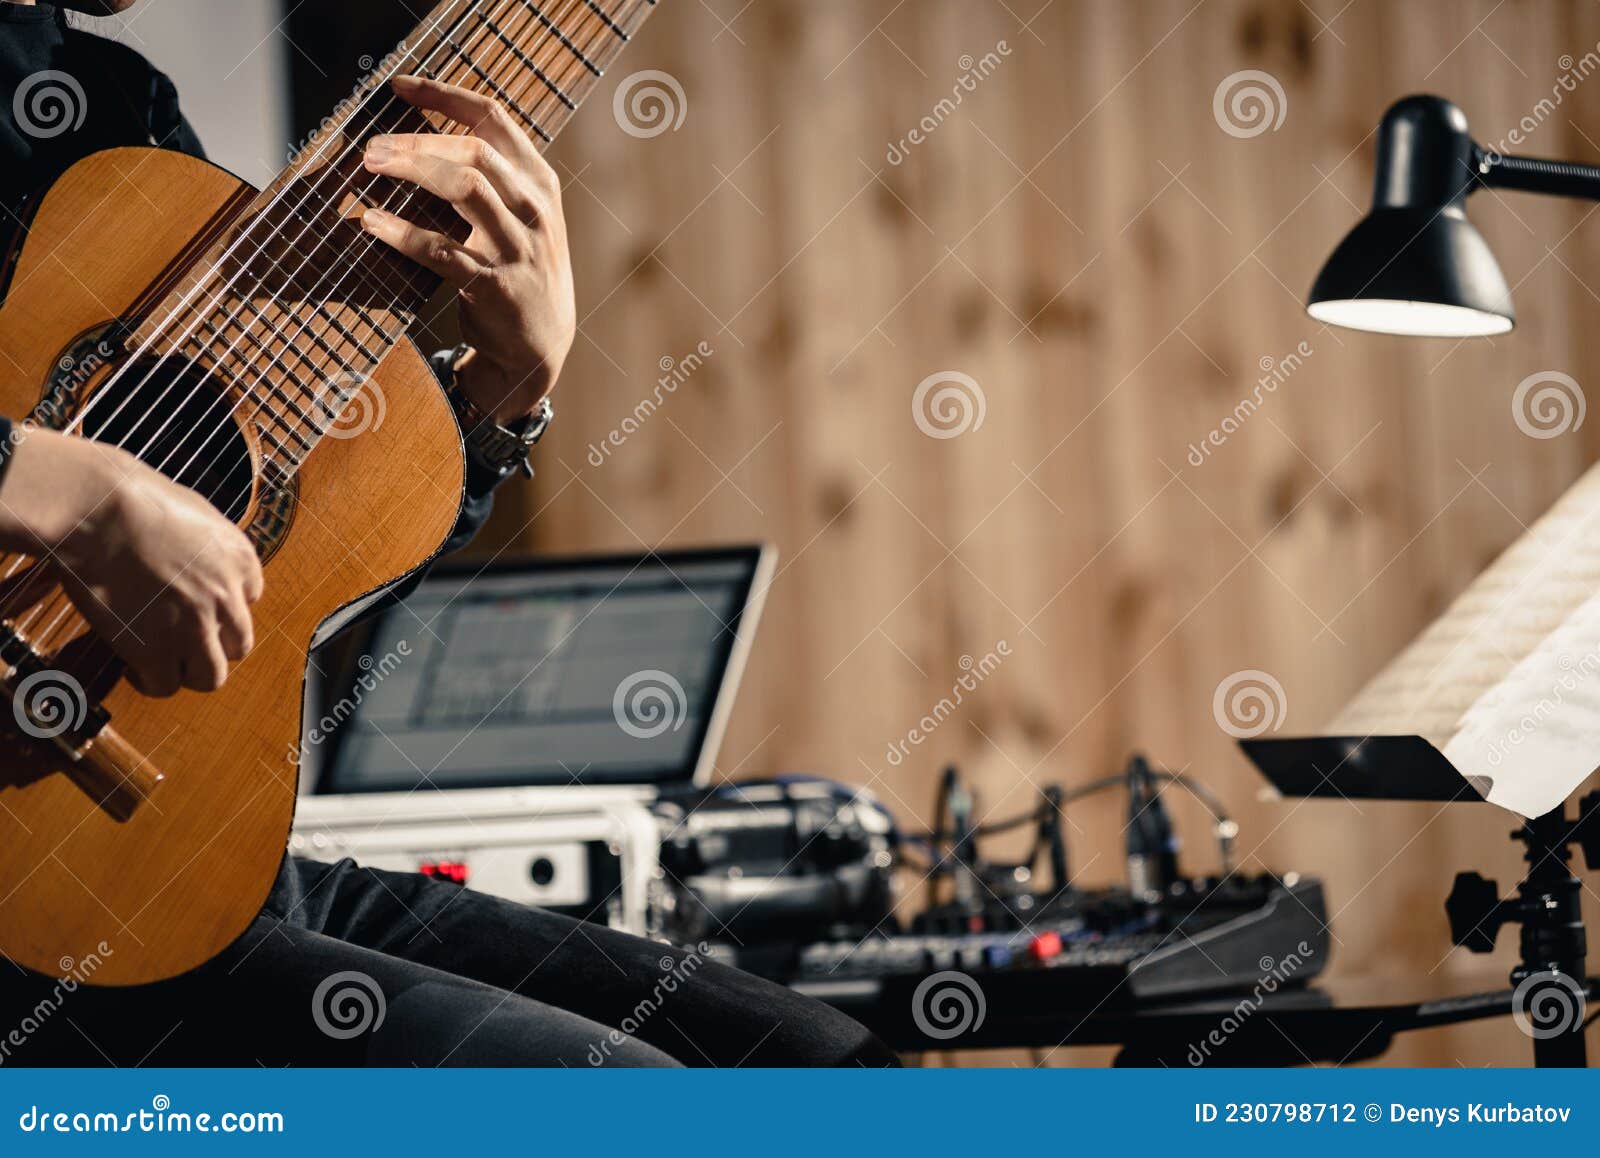 guitar player hands